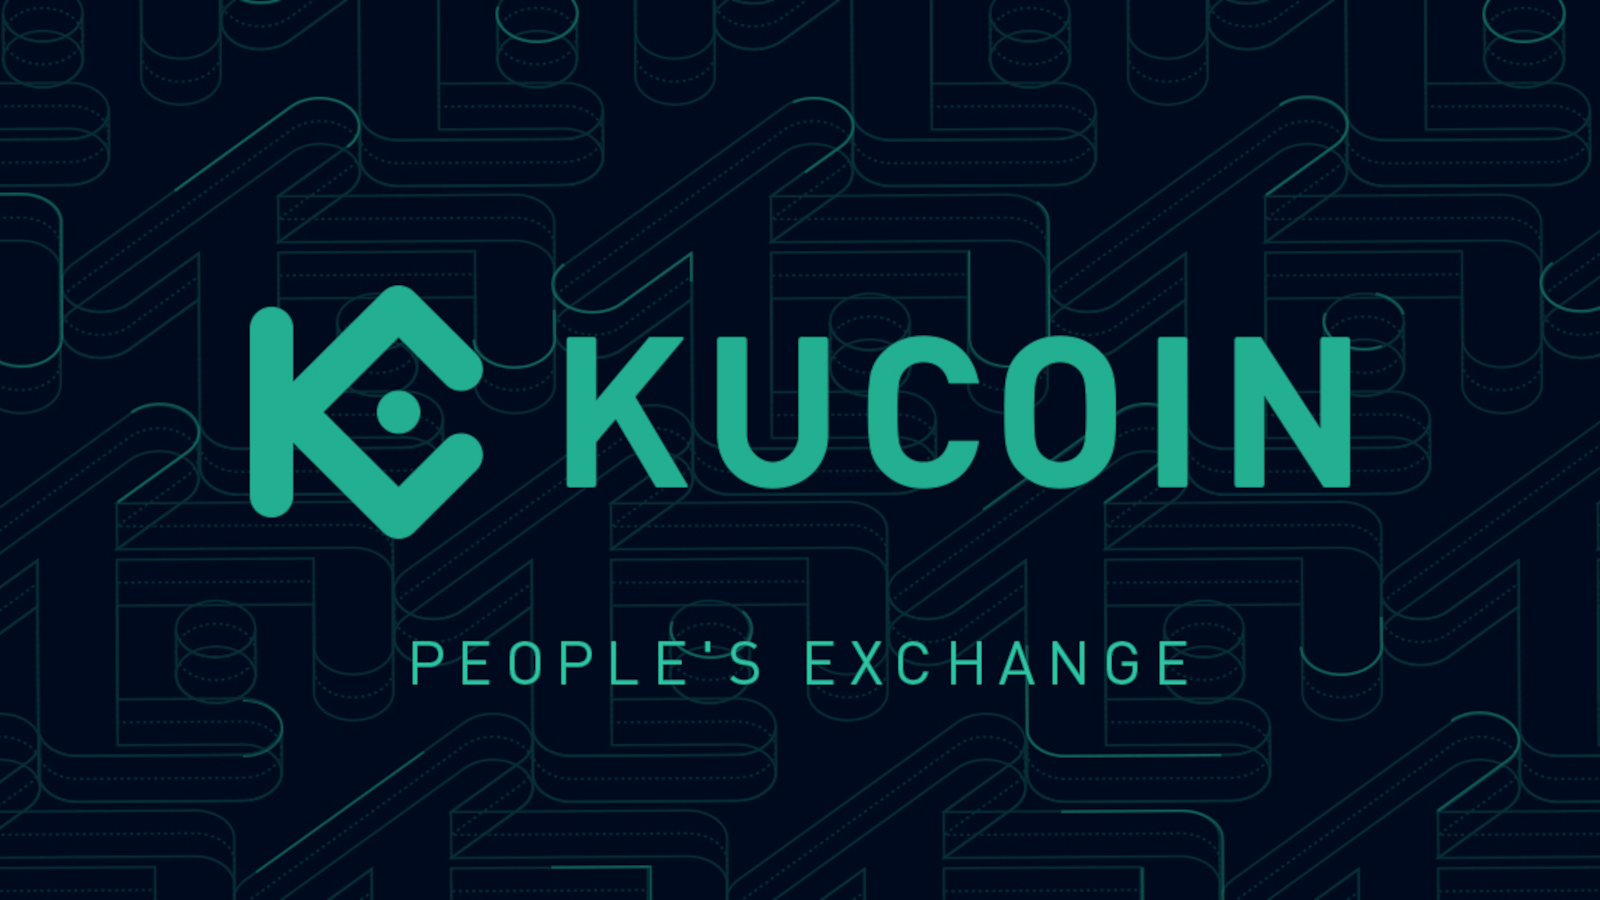 KuCoin Faces $1B Withdrawals, DOJ Charges Amid Crypto Turmoil